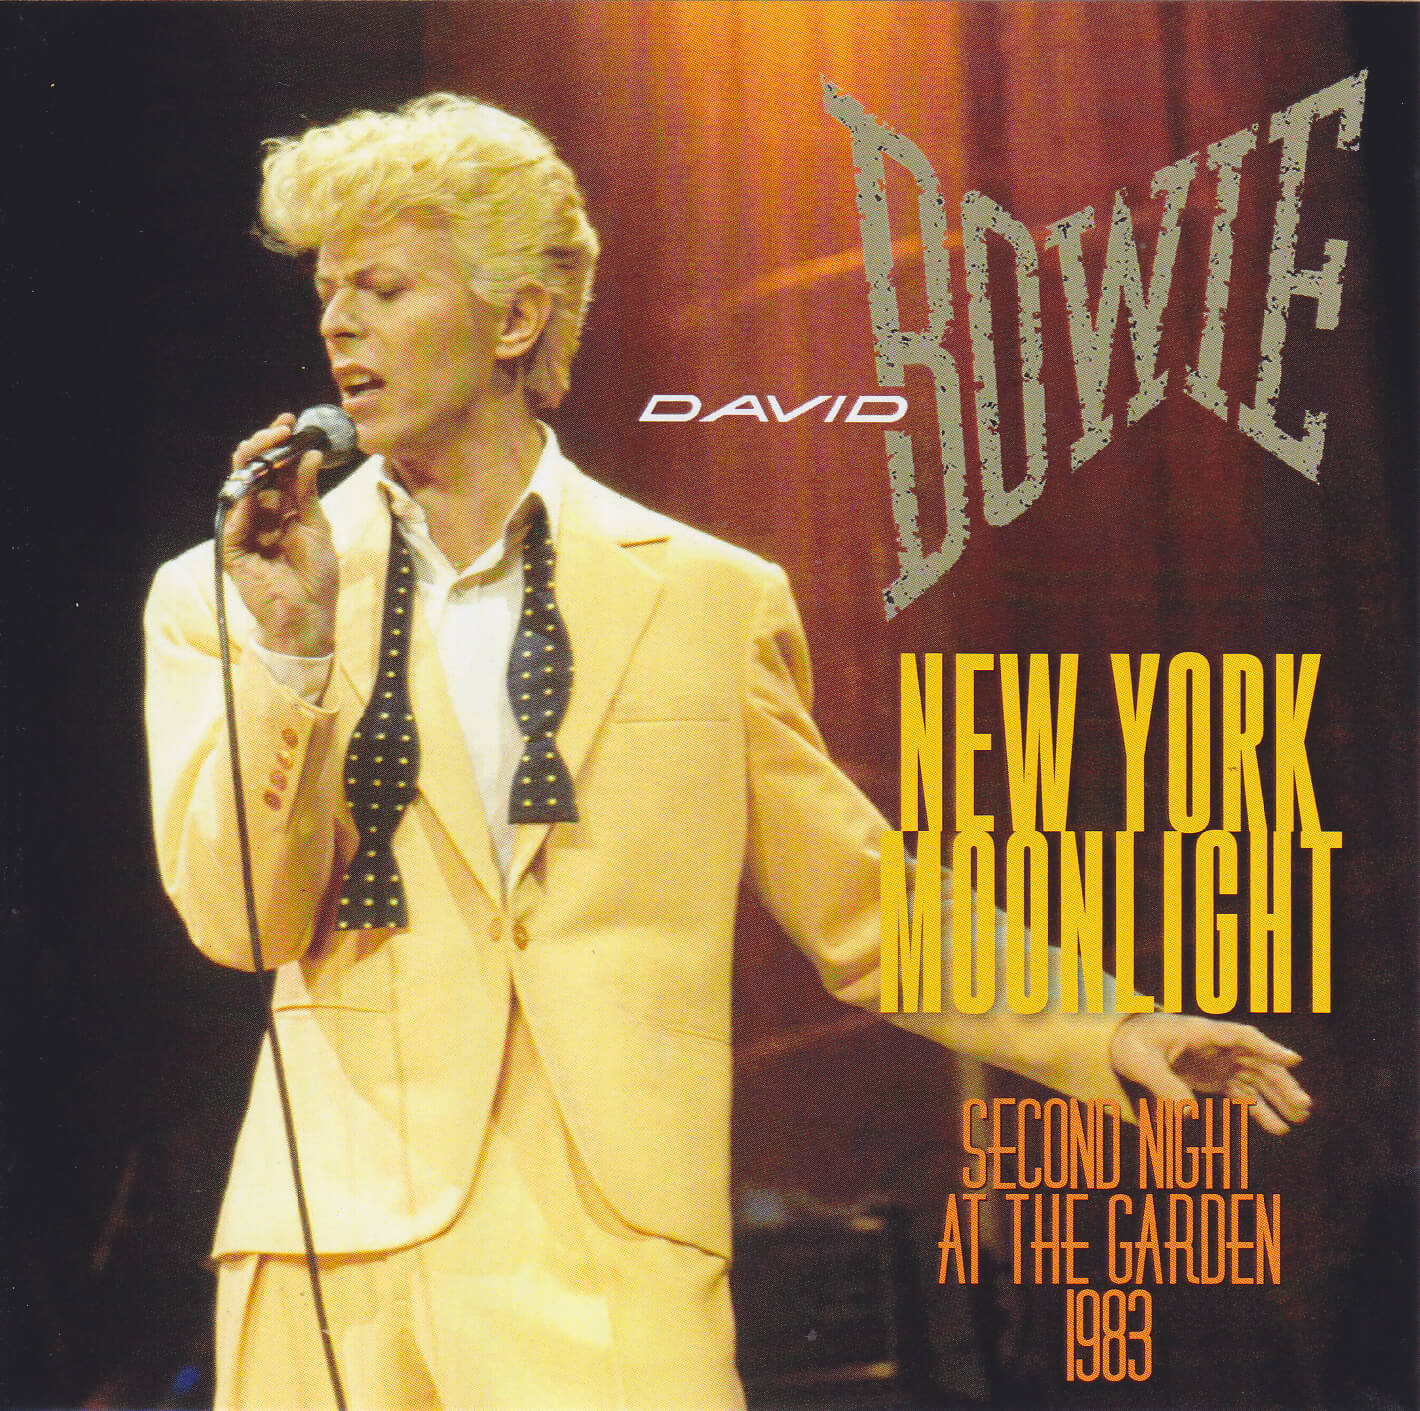 David Bowie / New York Moonlight Second Night At The Garden 1983 ...